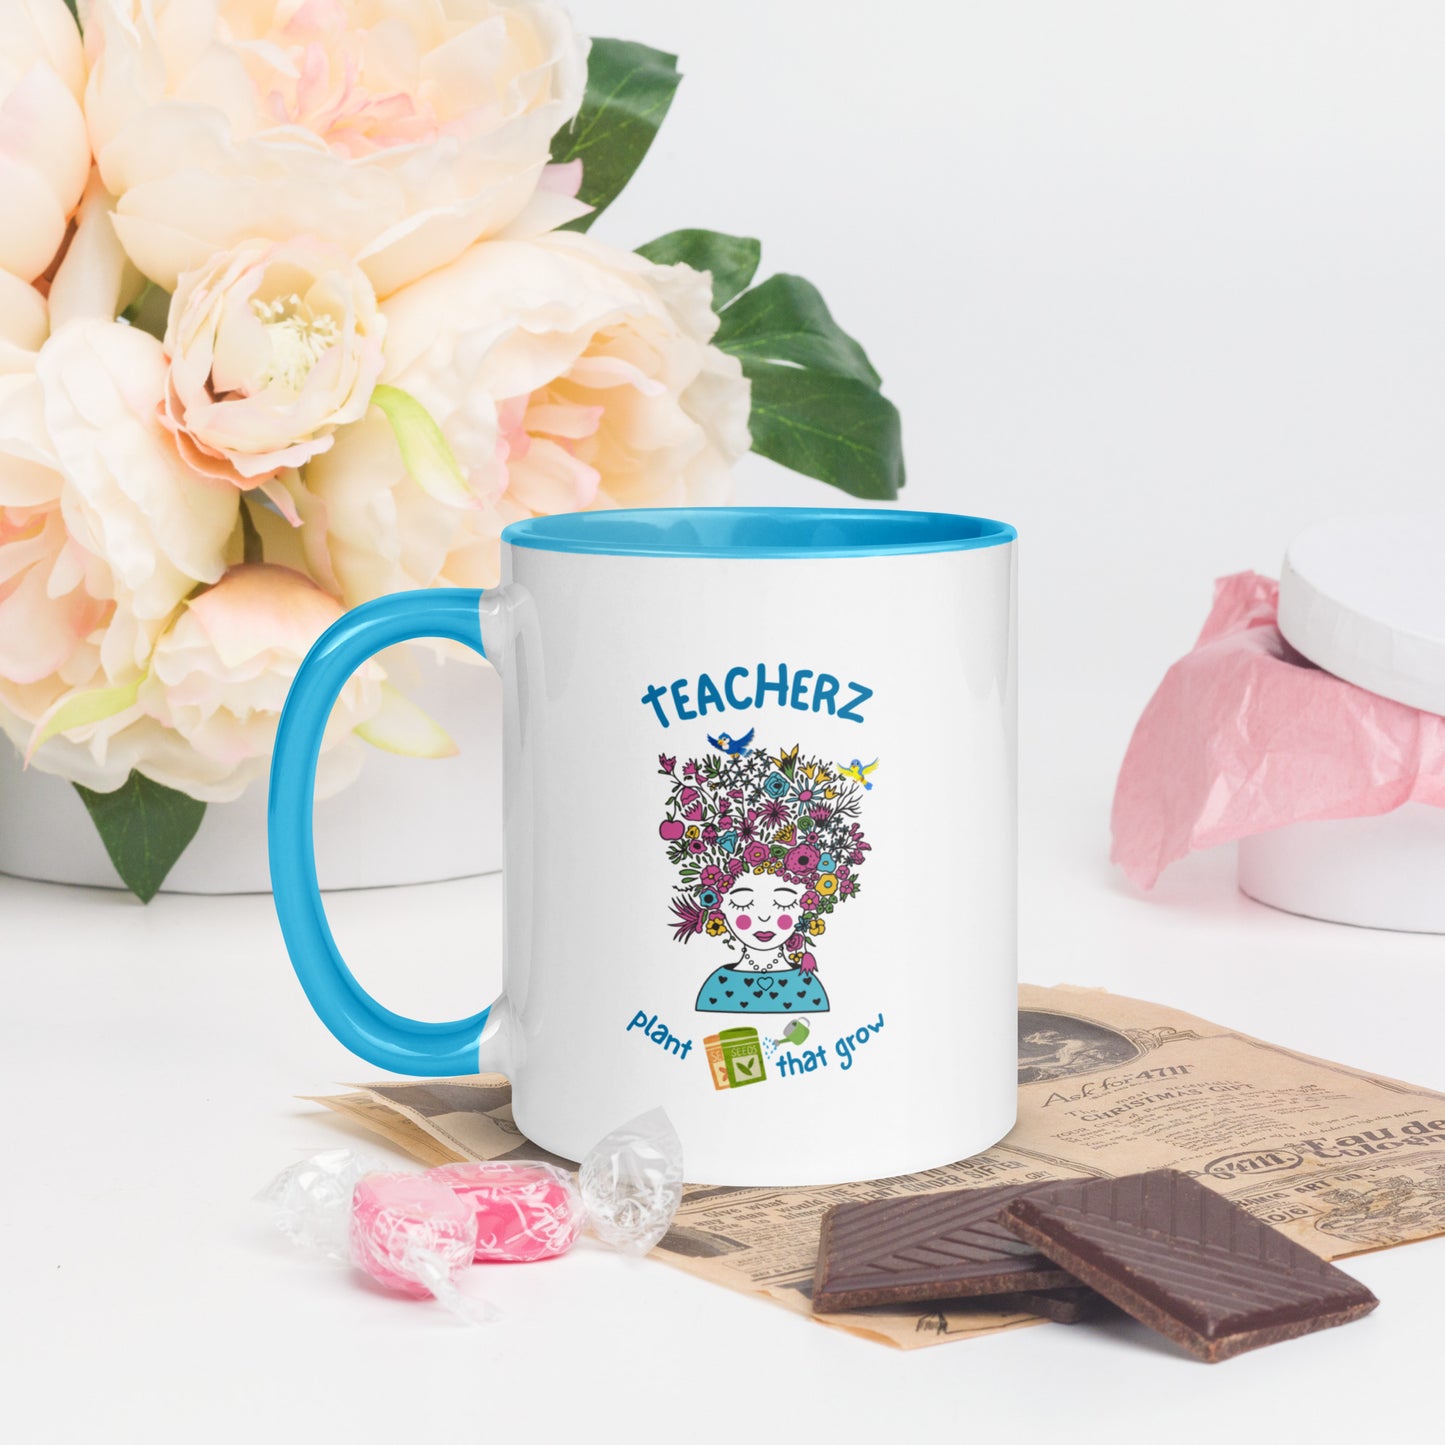 Teacherz Plant Seeds That Grow Mug with Color Inside, Teacher Mugs, Colorful Mugs, Ceramic Mugs, Gifts for Teachers